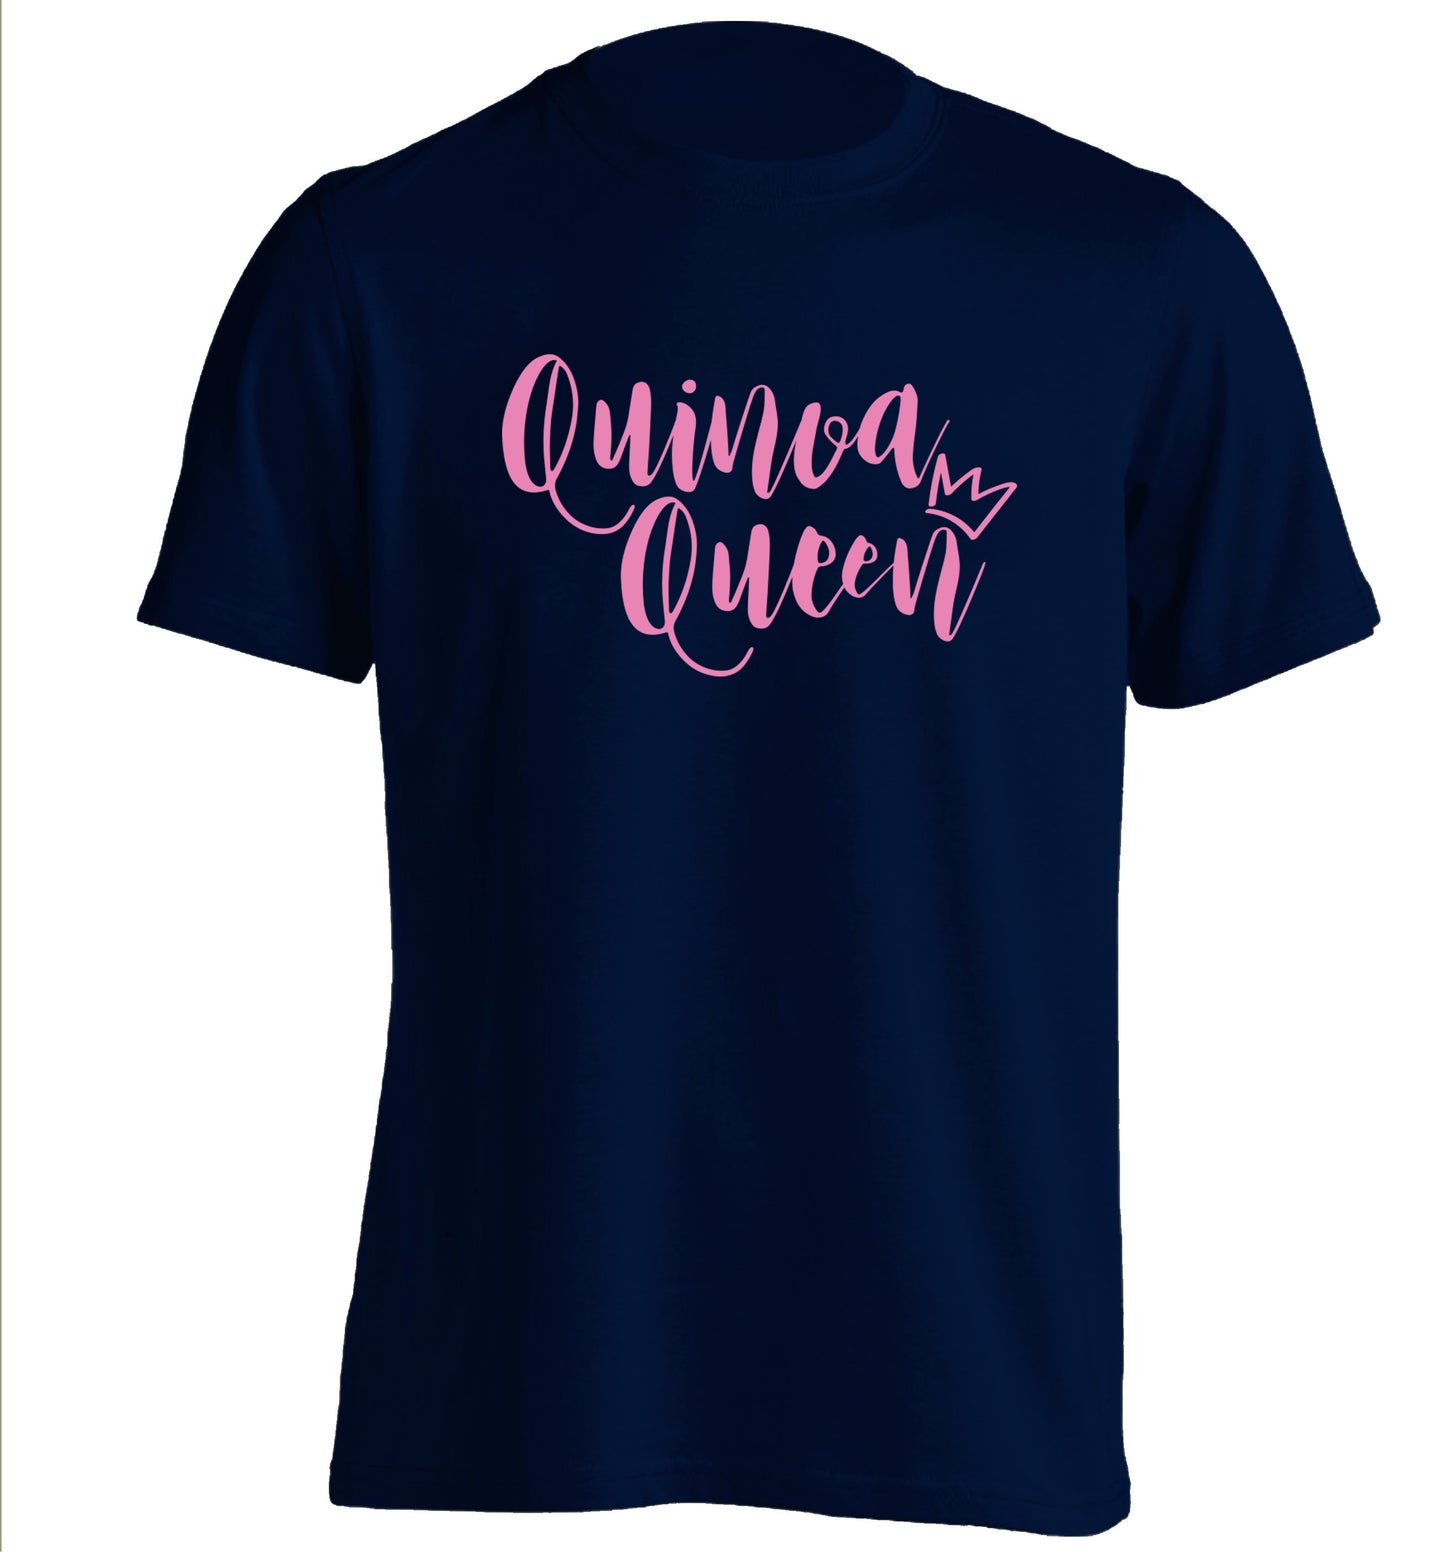 Quinoa Queen adults unisex navy Tshirt 2XL